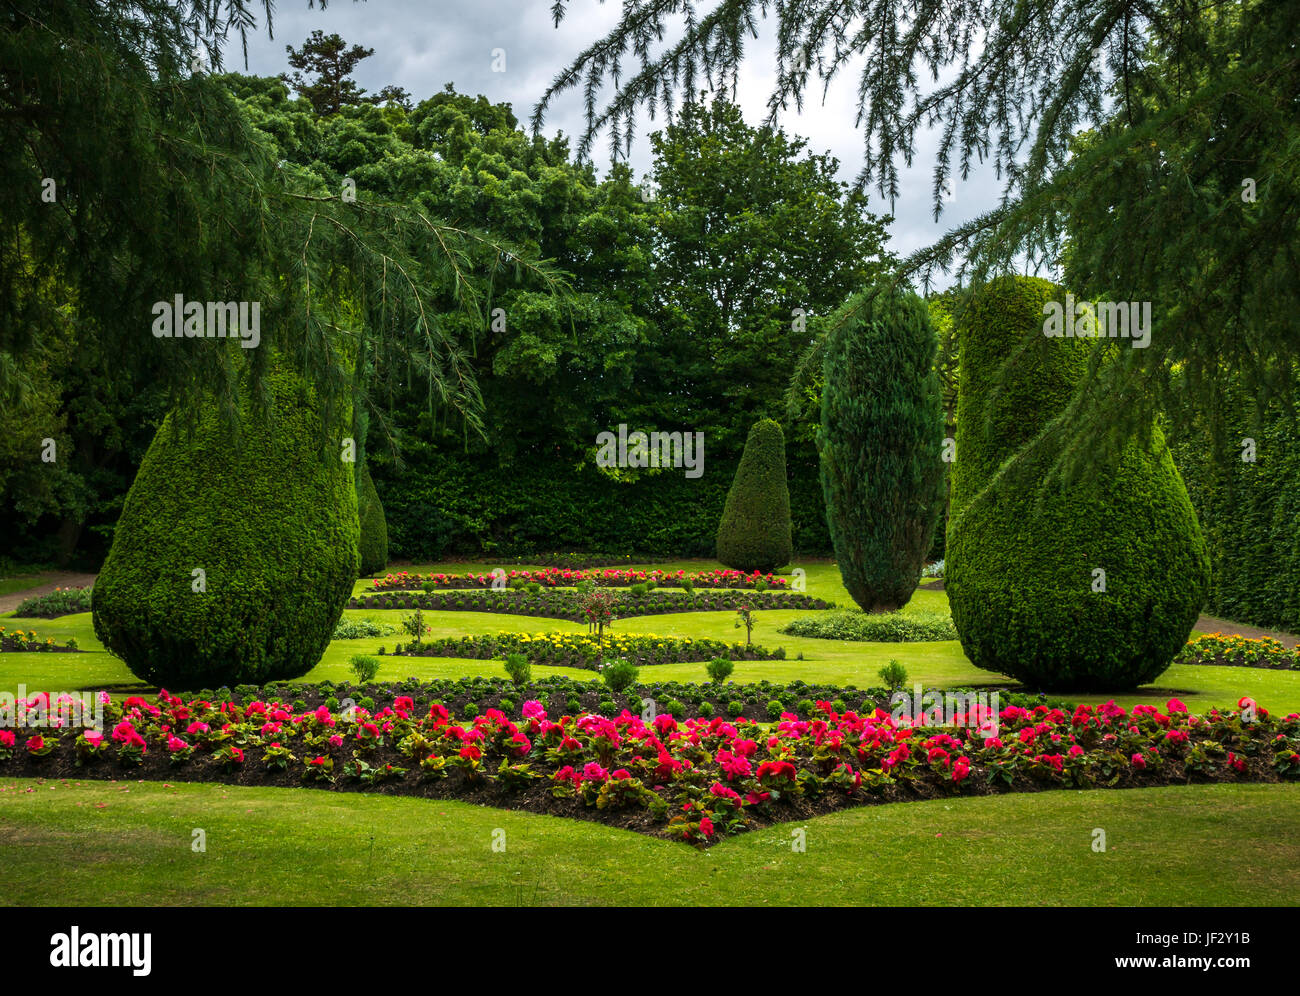 Formal flower garden, Dirleton Castle, with topiary yew hedges, Dirleton, East Lothian, Scotland, UK Stock Photo